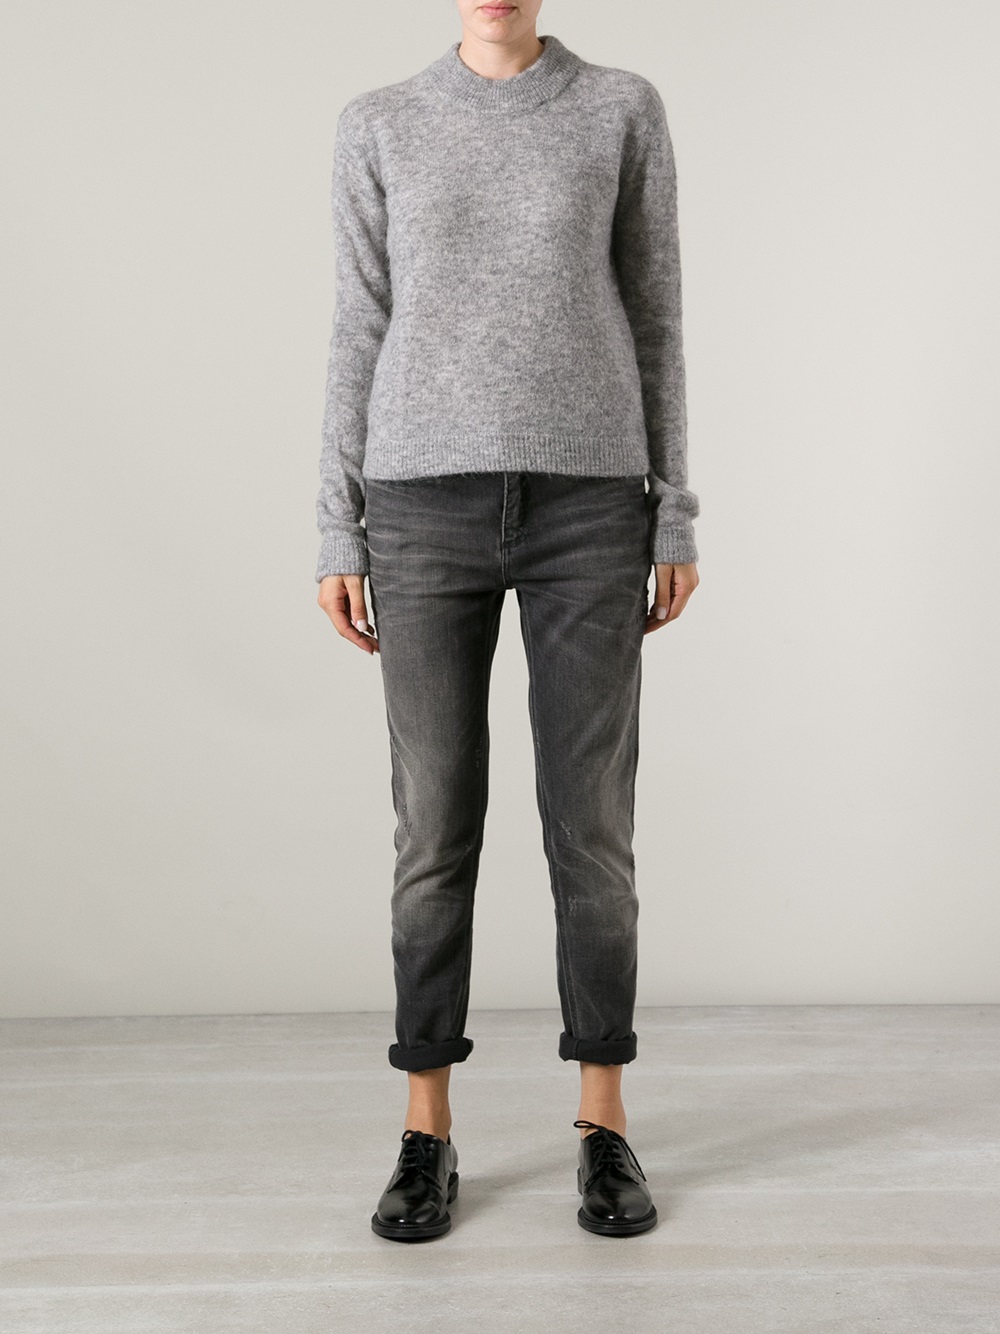 Acne Studios Lia Mohair Sweater in Grey (Gray) - Lyst